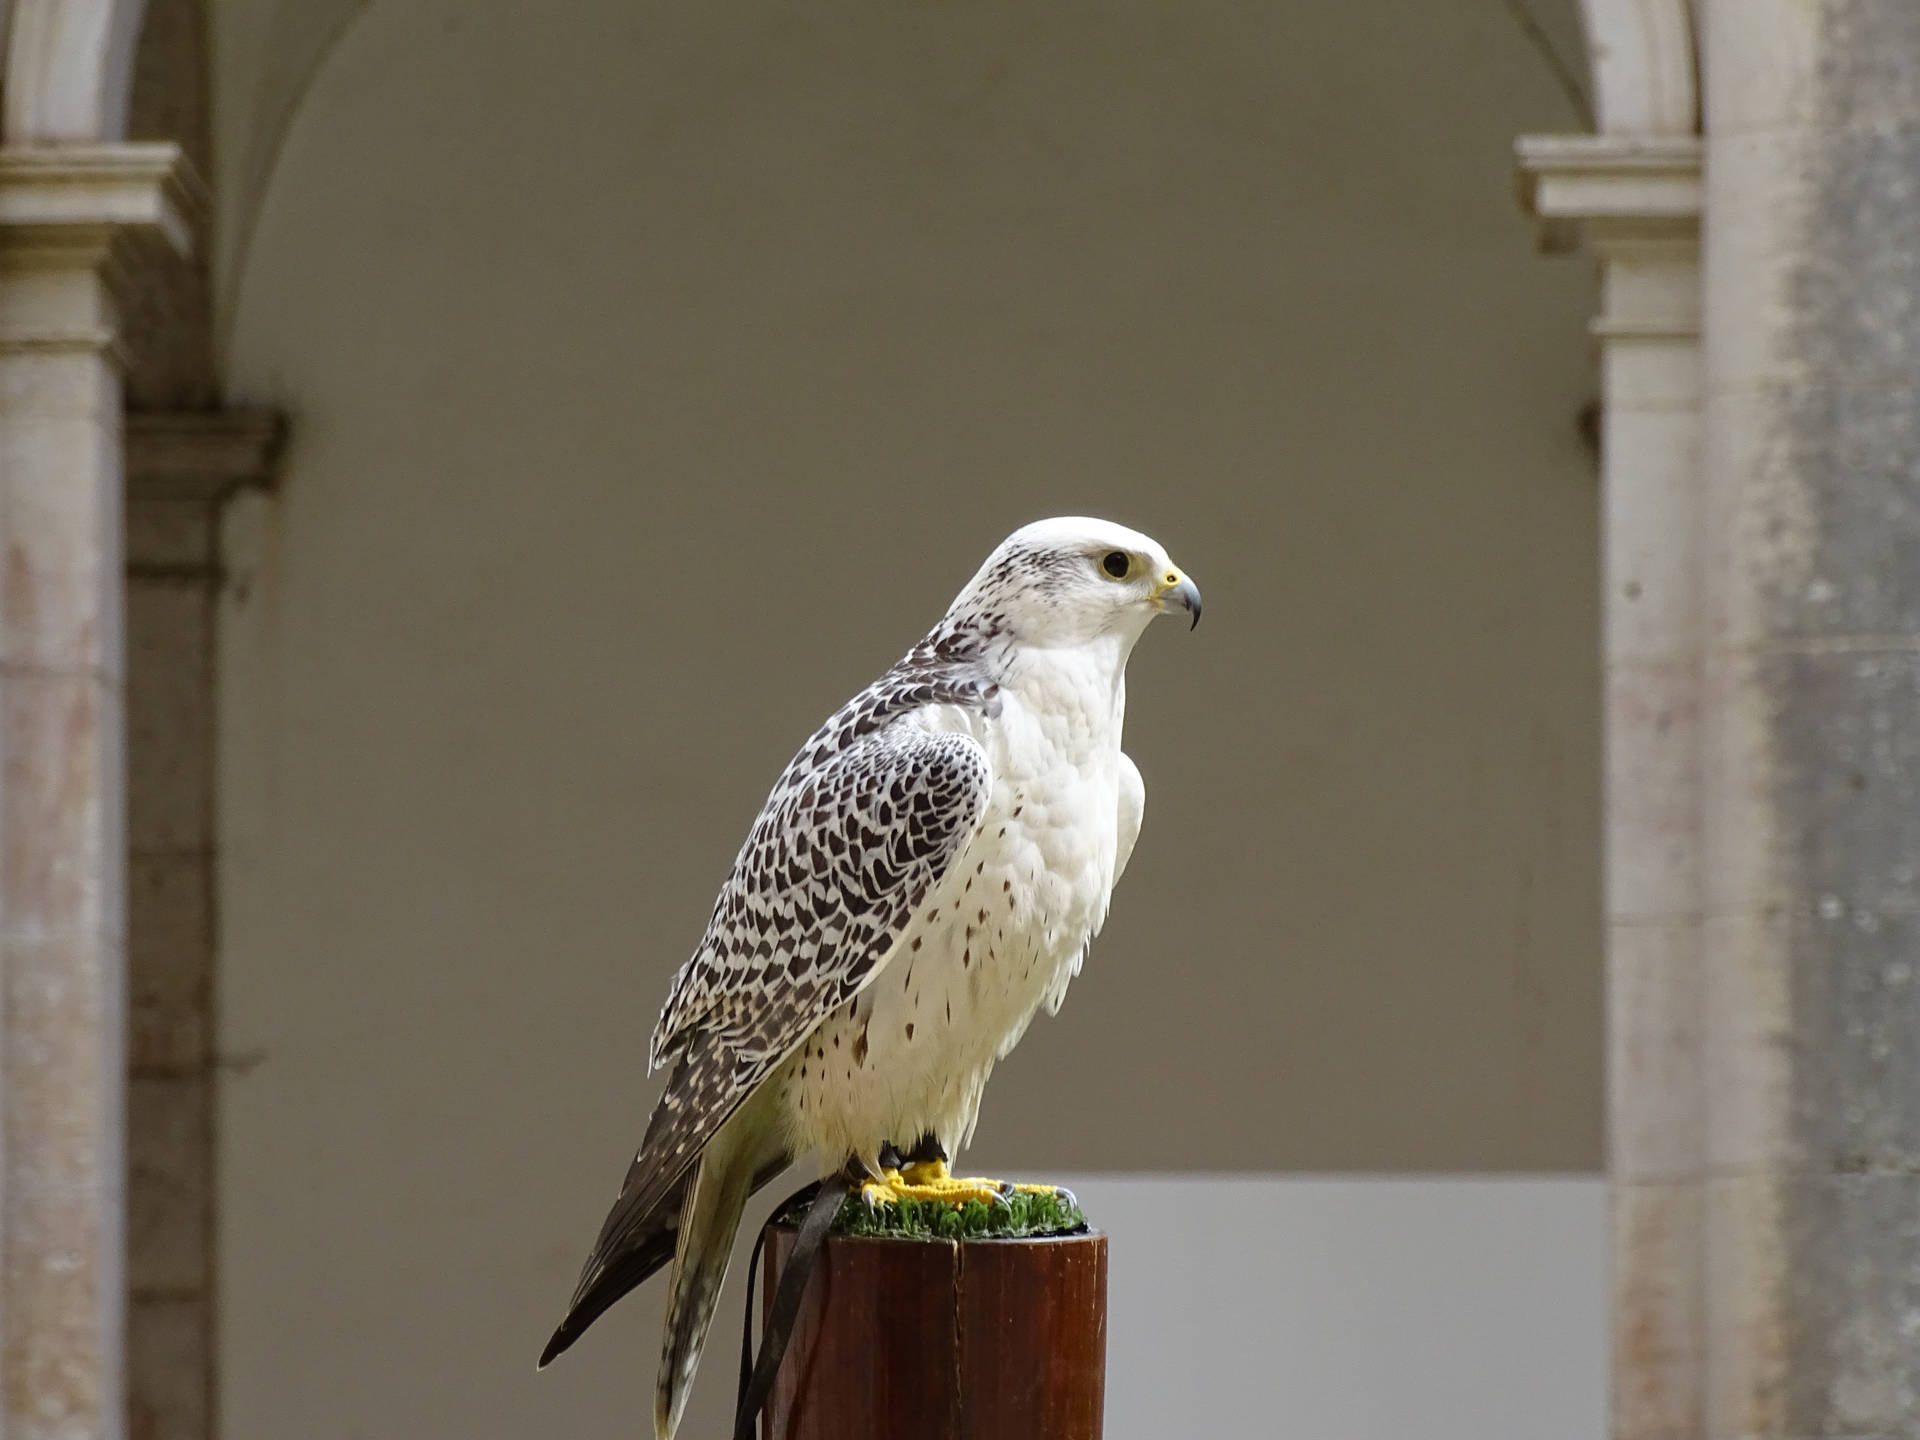 White Falcon With Black Specks Background